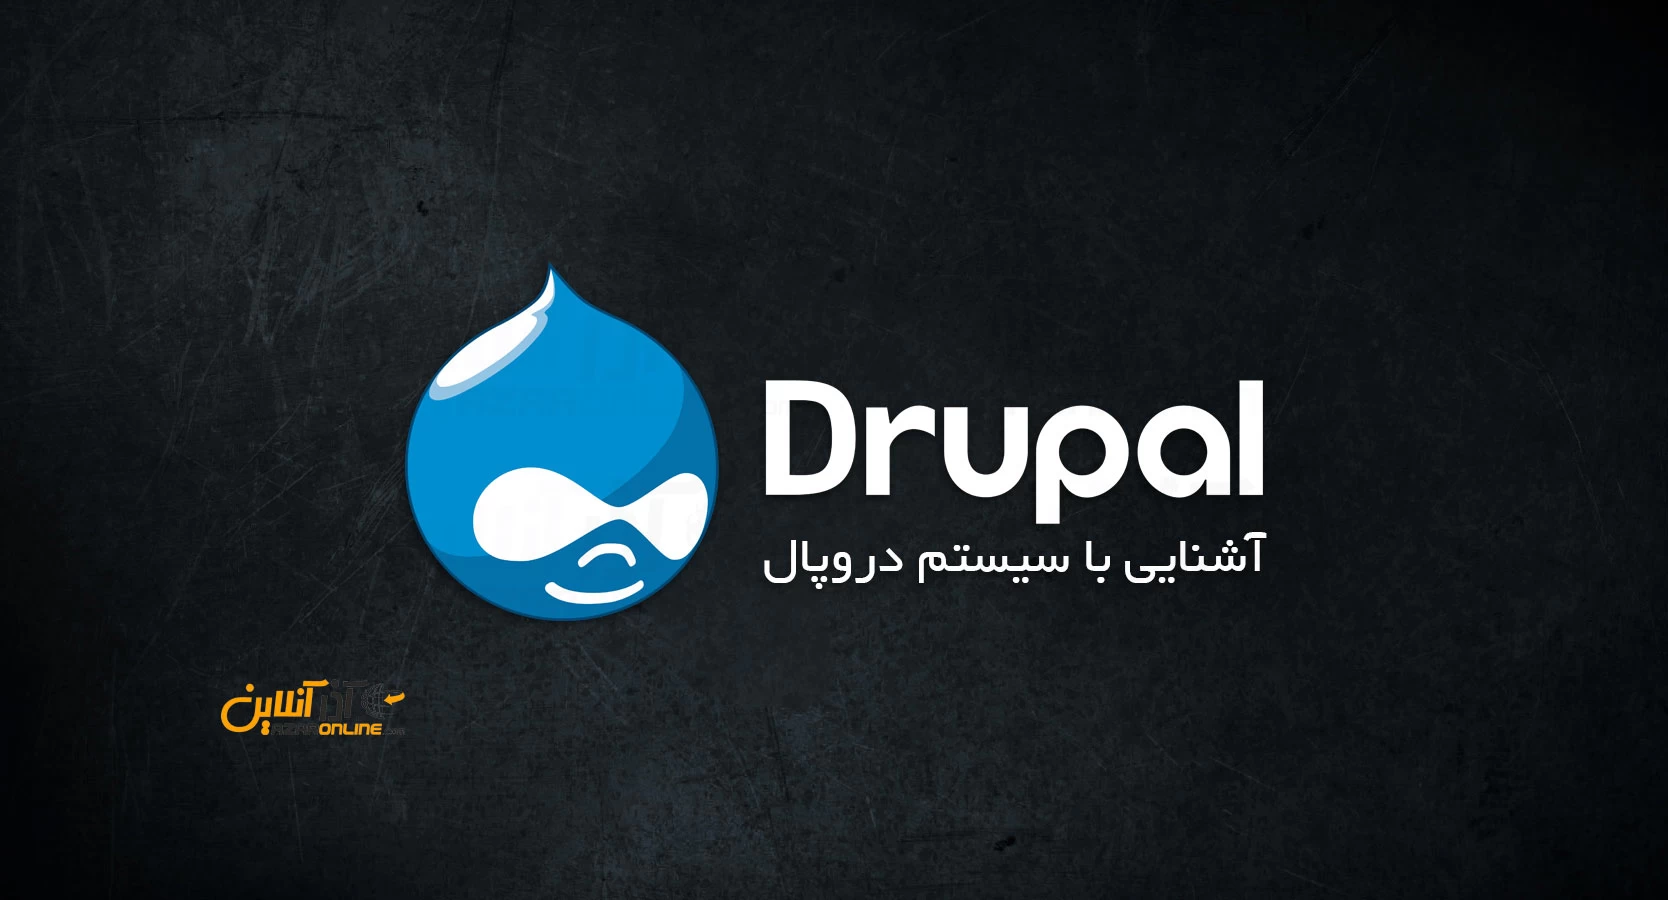 آشنایی با سیستم دروپال Drupal